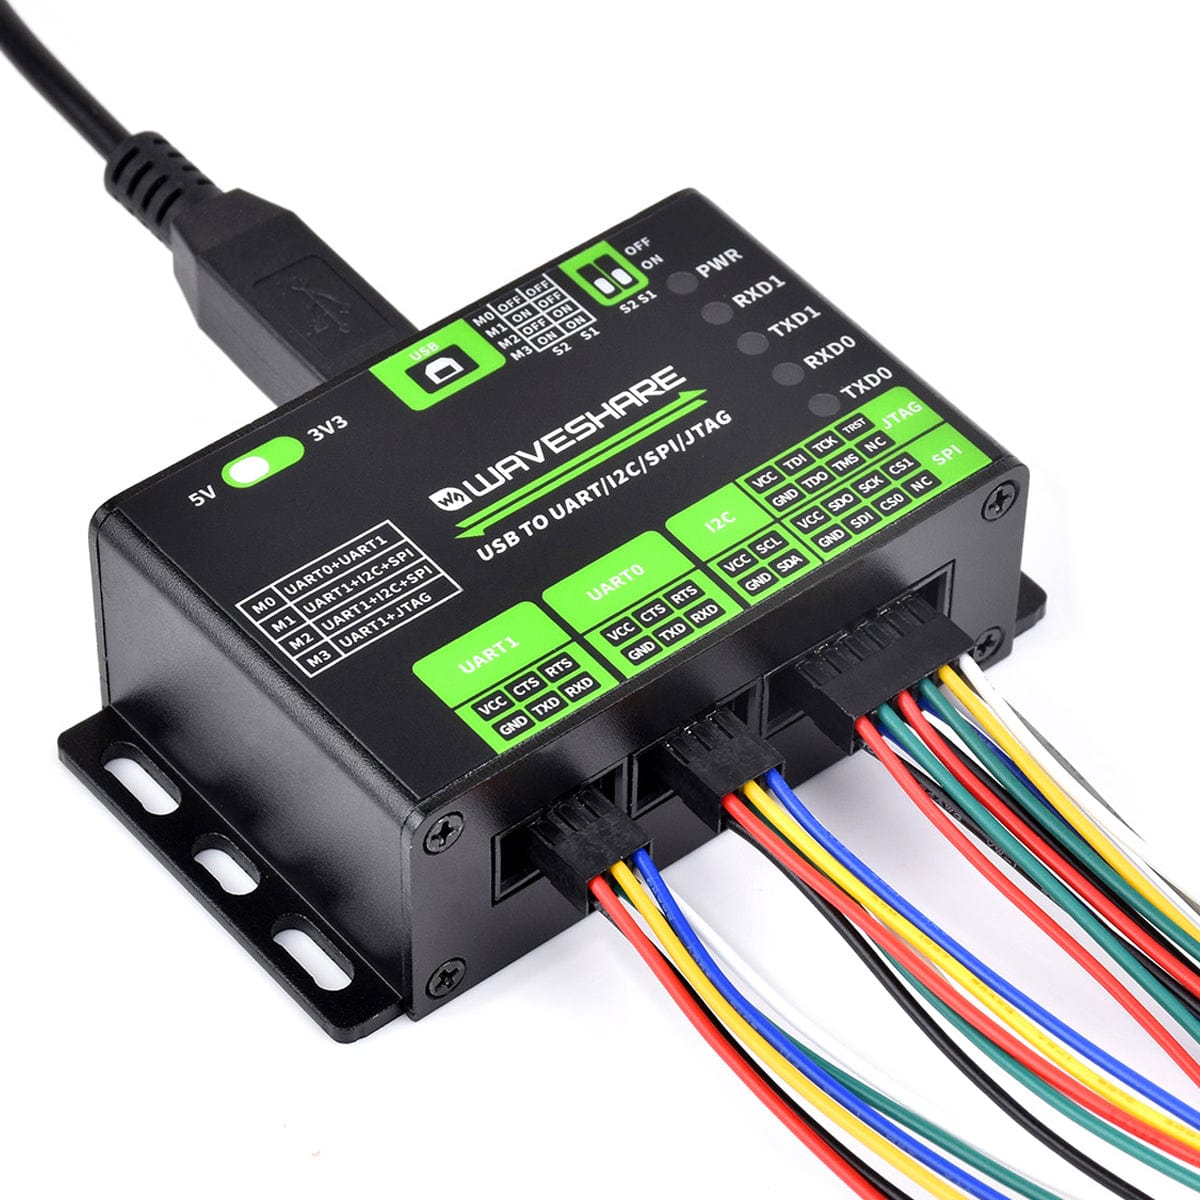 USB To UART/I2C/SPI/JTAG Converter - The Pi Hut